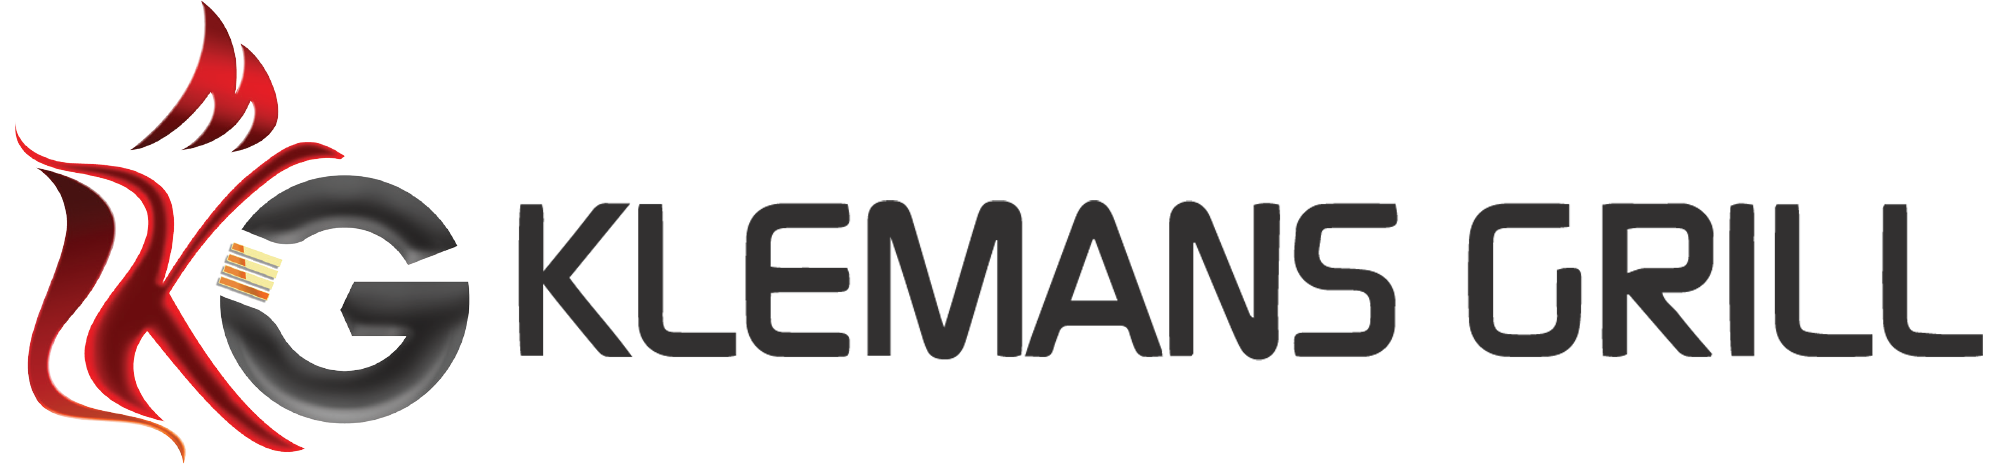 Klemans Grill Logo